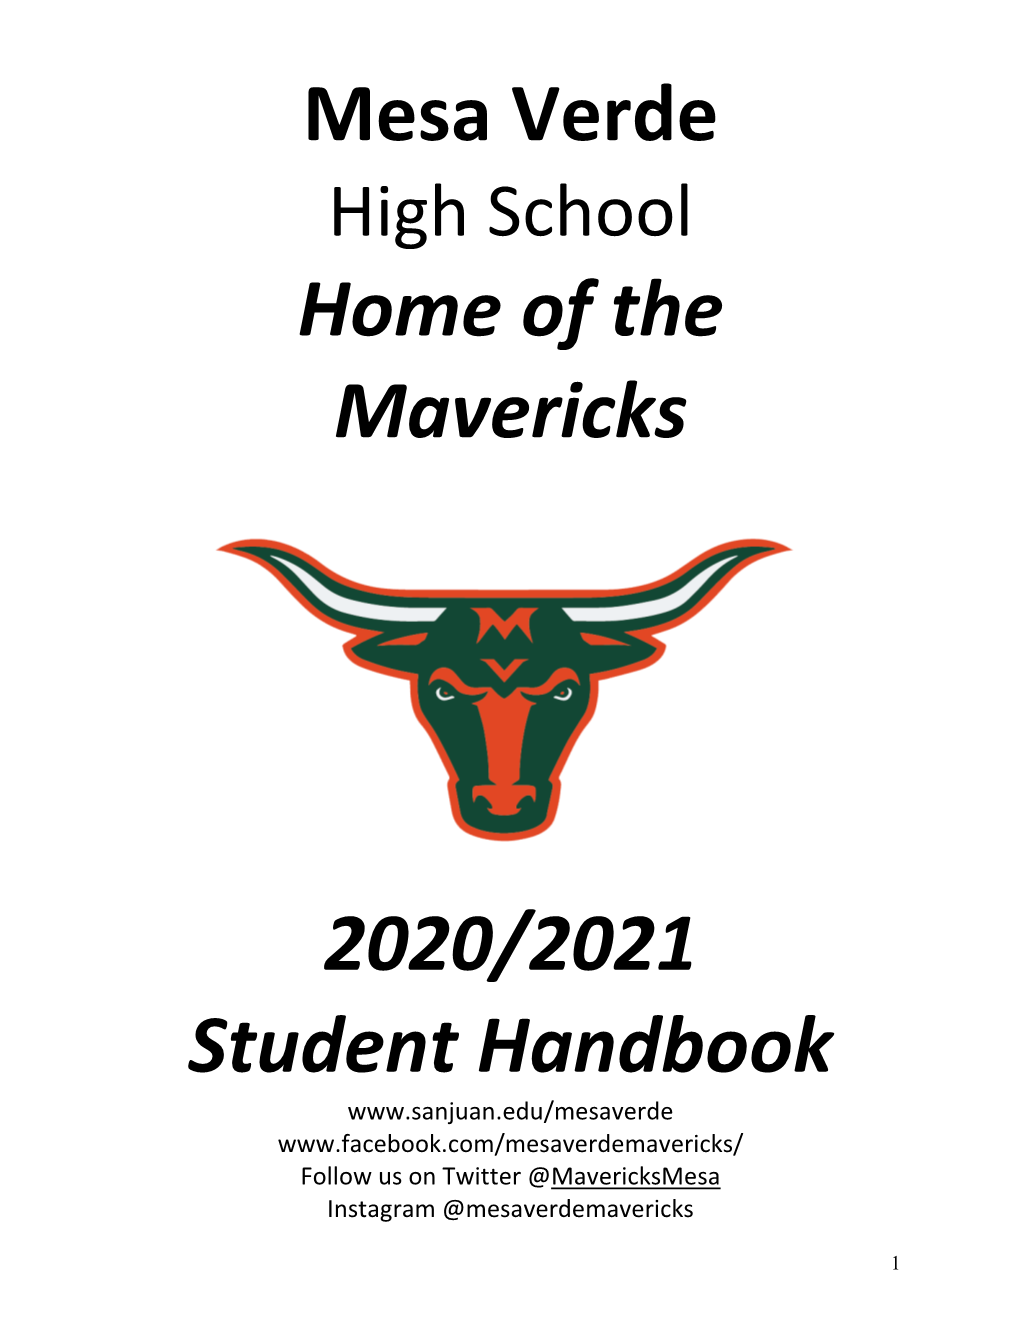 Mesa Verde Home of the Mavericks 2020/2021 Student Handbook